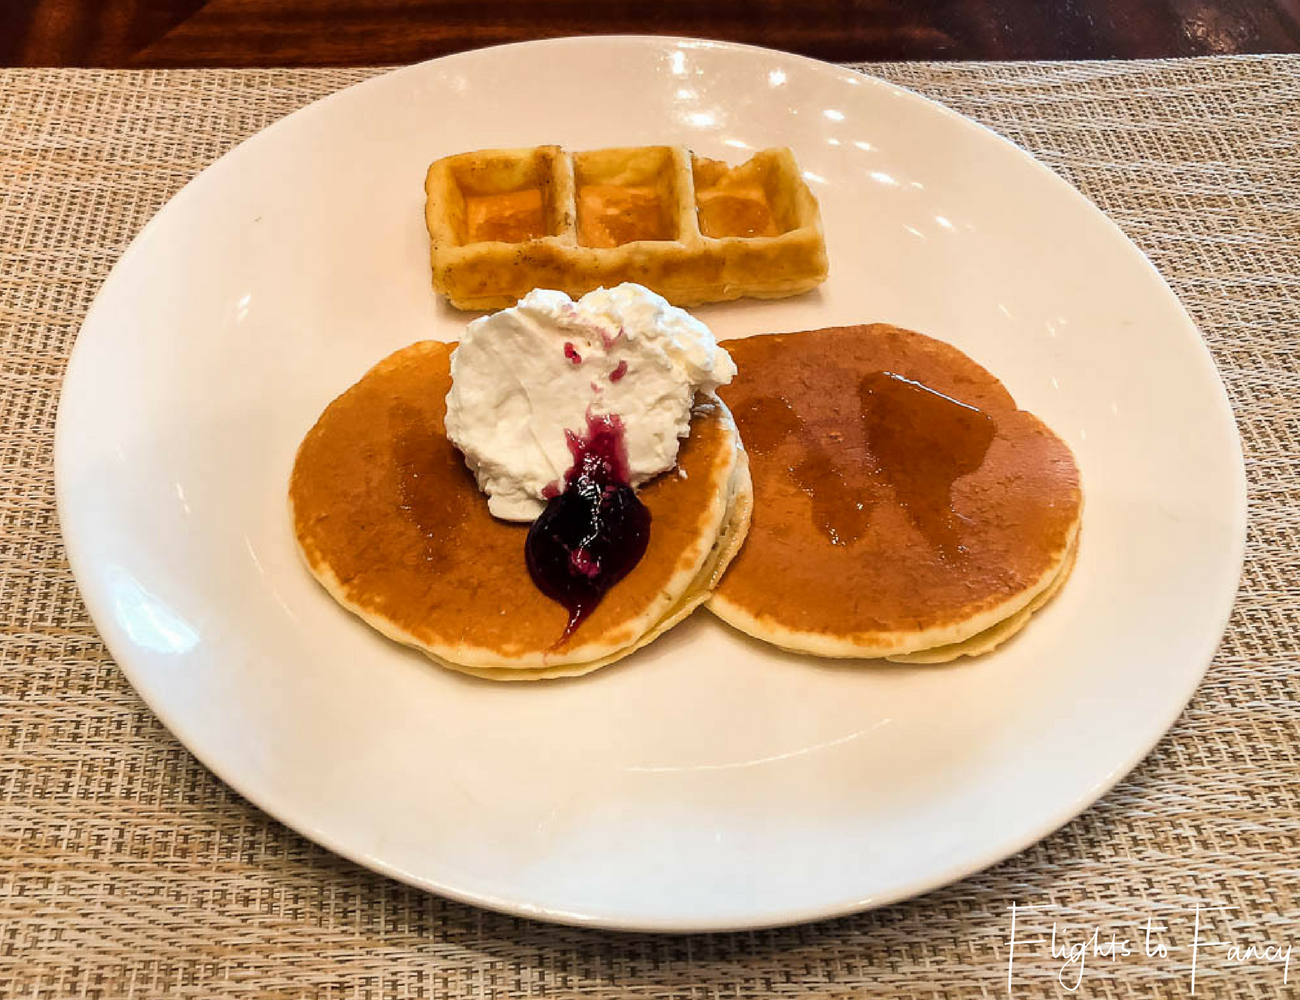 Hotel near SM Cebu City - Radisson Blue Cebu Breakfast Pancakes & Waffles by Flights to Fancy